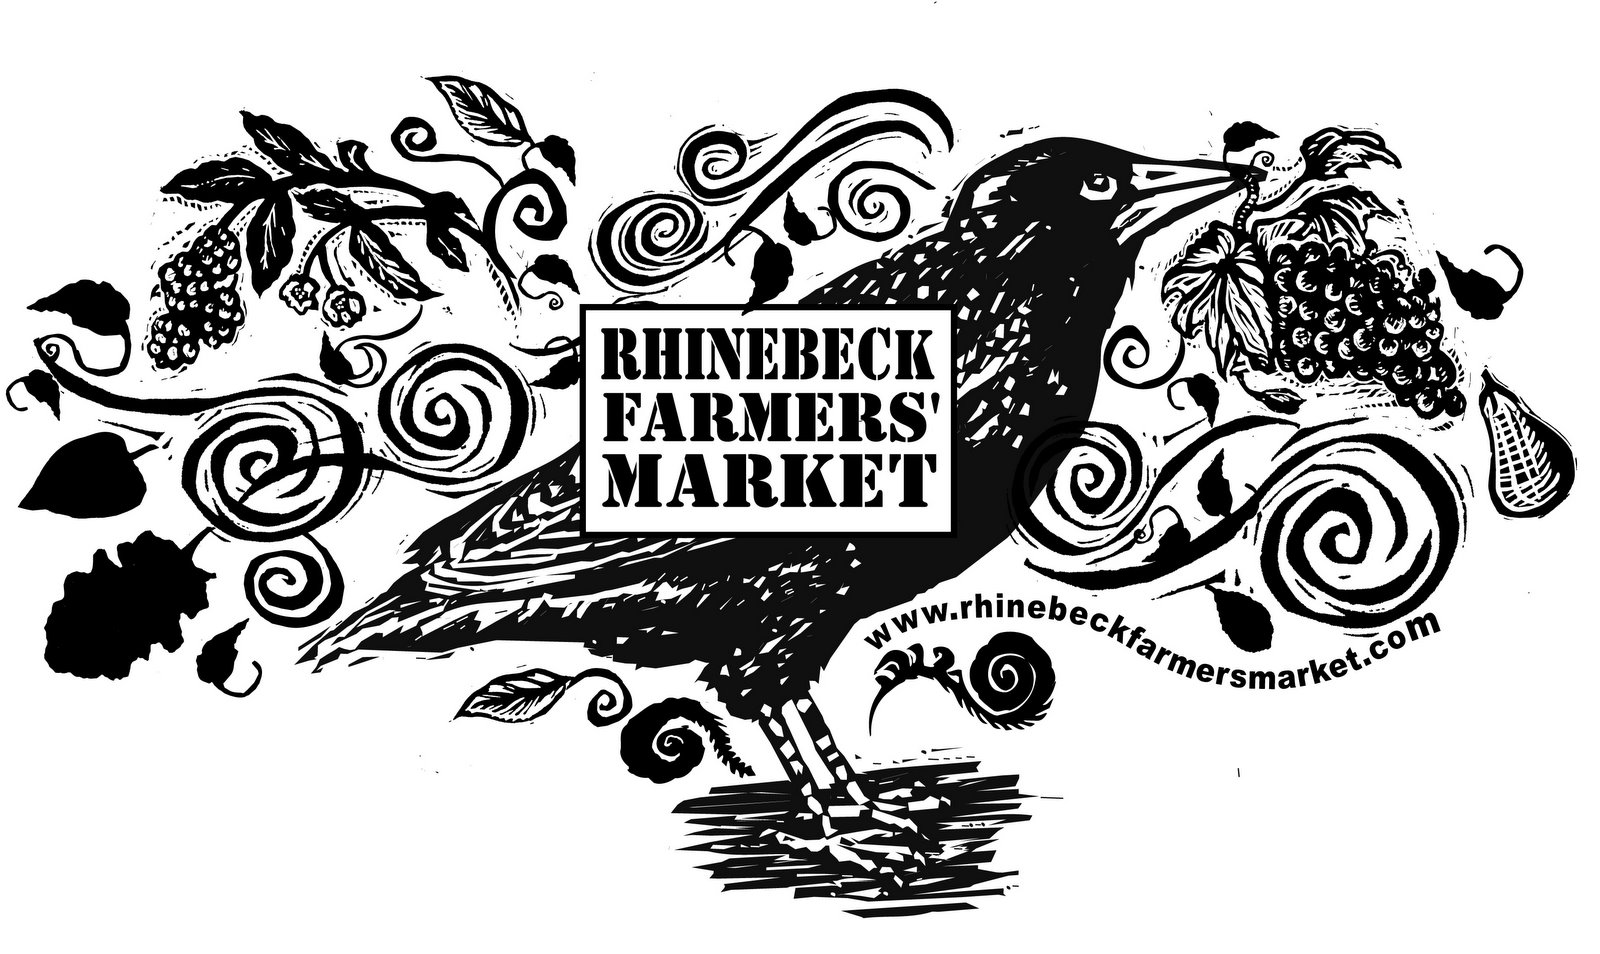 Rhinebeck Farmers' Market